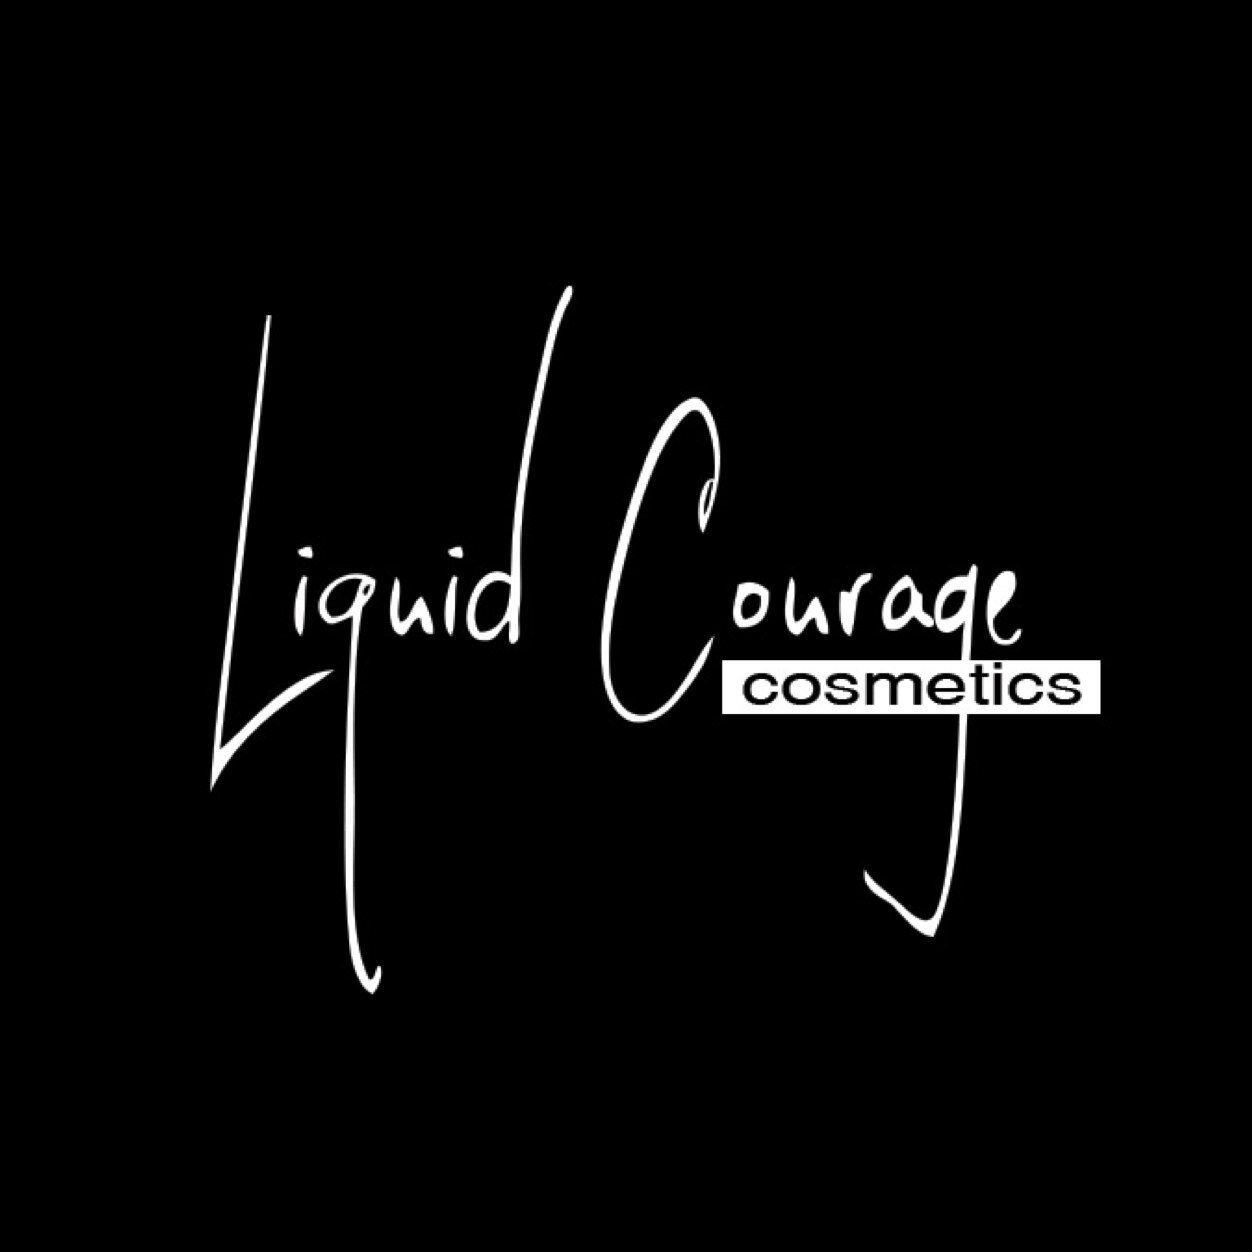 Liquid Courage Cosmetics